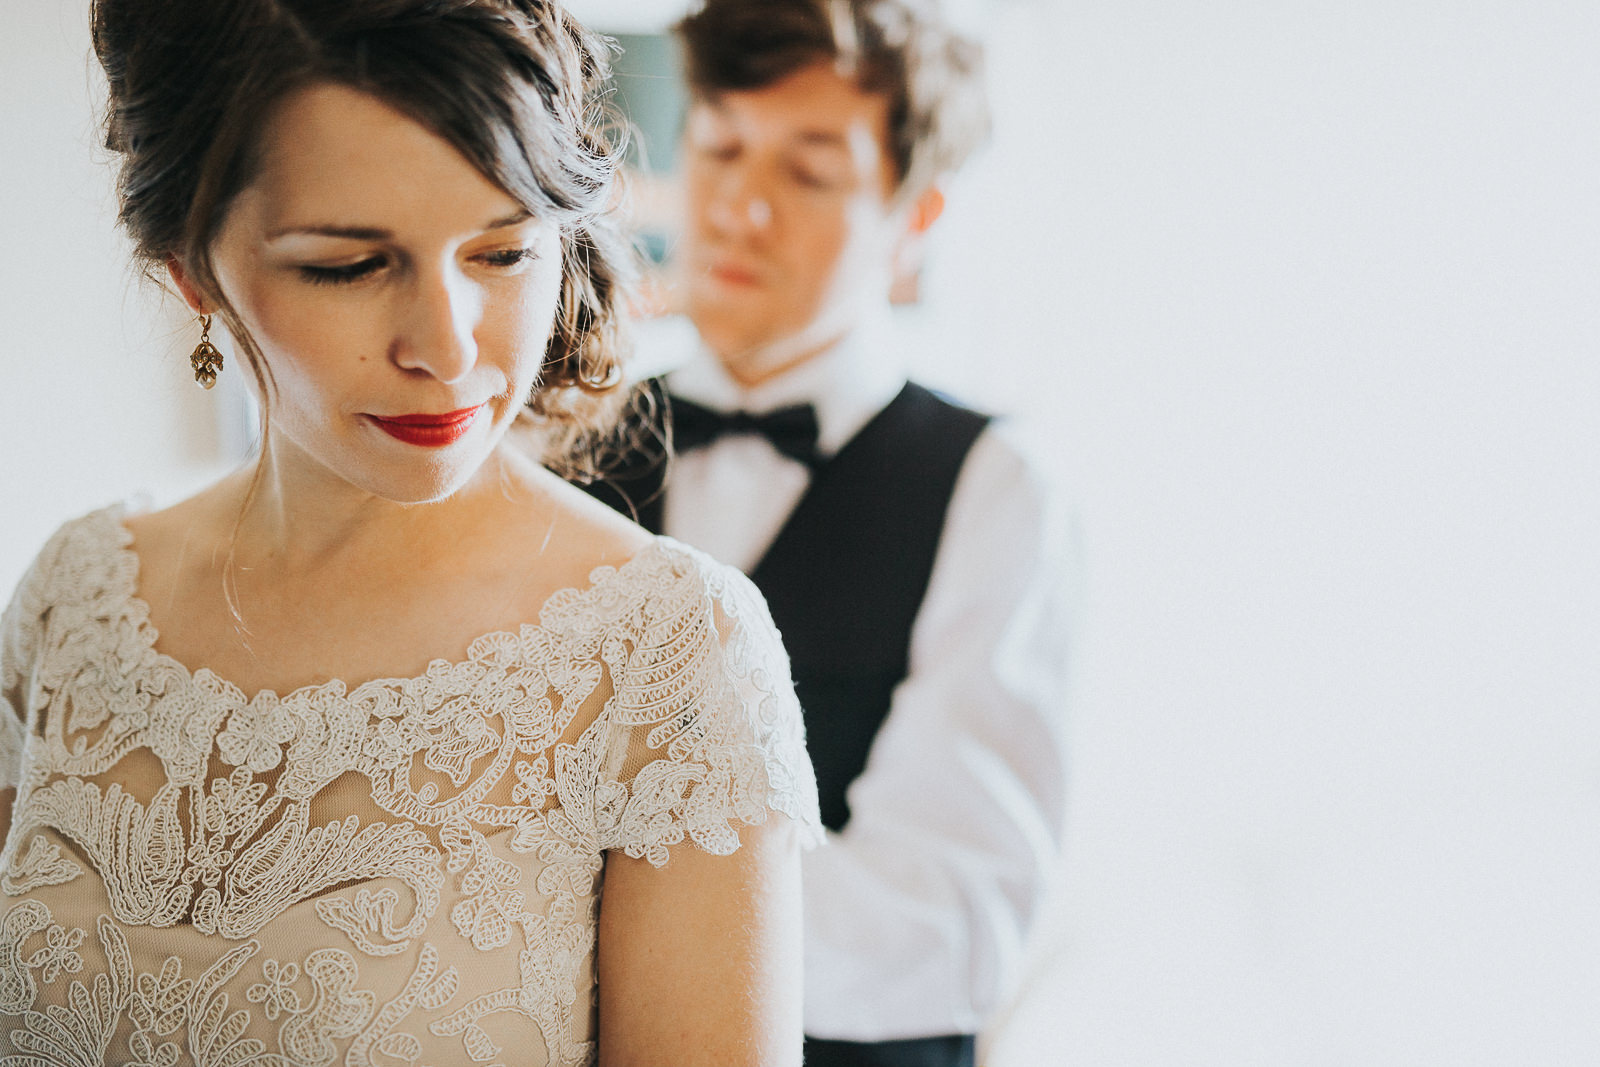 15 groom dressing bride before wedding - Megan + Jon // Orpheum Wedding Photography in Madison